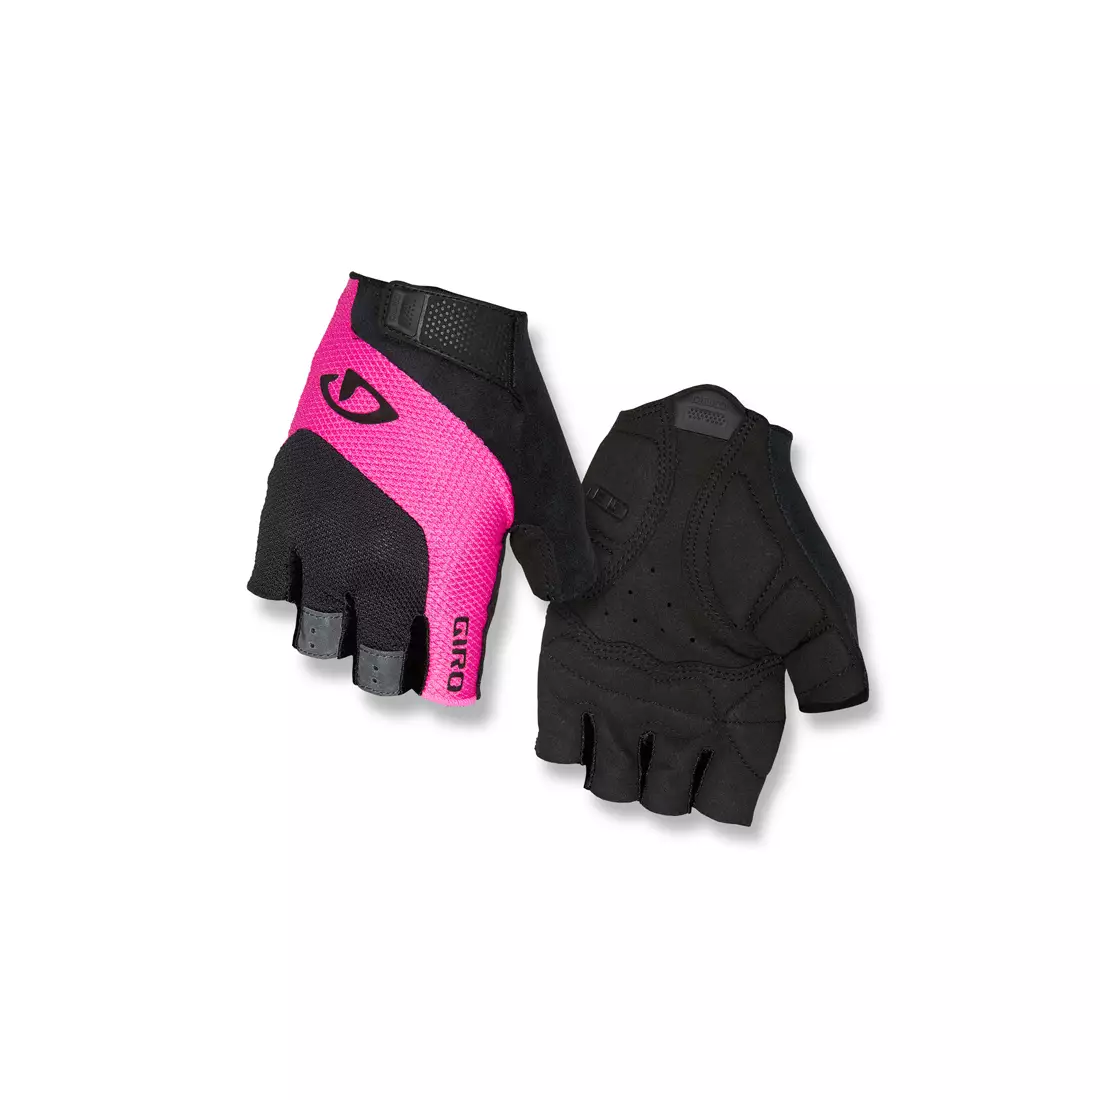 GIRO TESSA GEL dámské cyklistické rukavice, černé a růžové